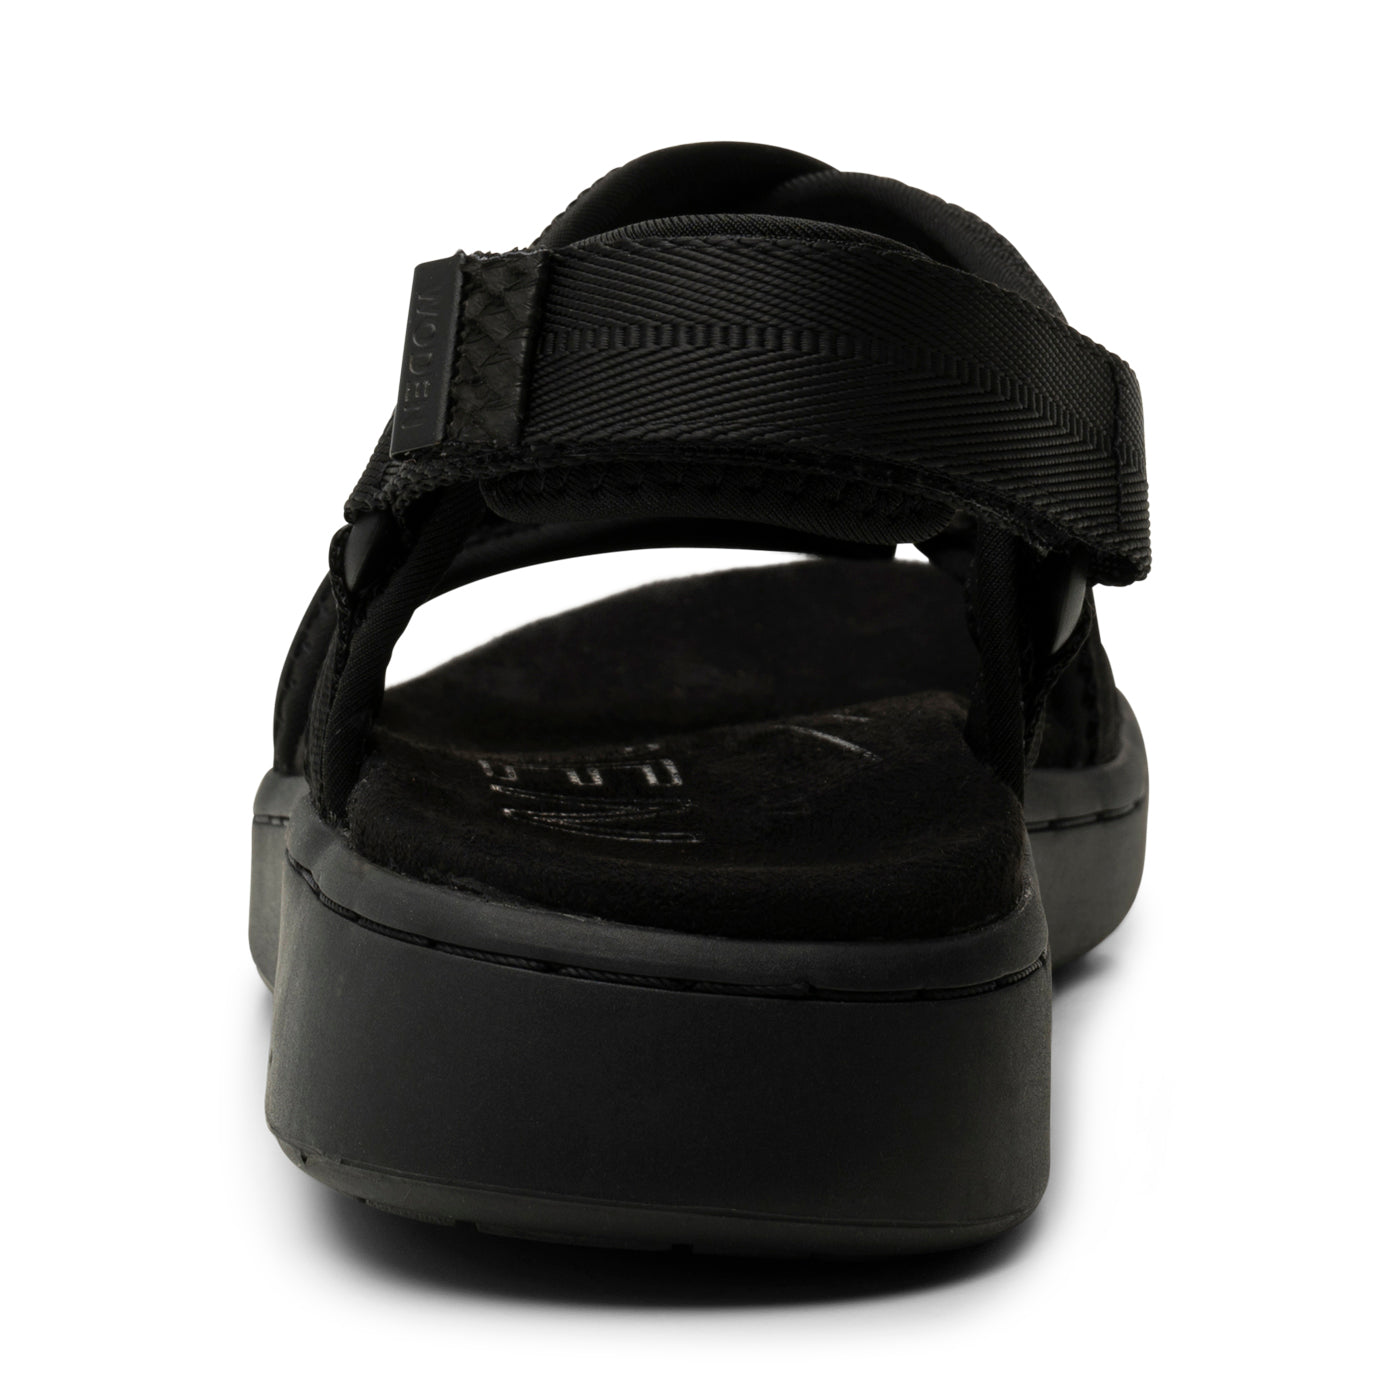 WODEN Line Cross Sandals 020 Black